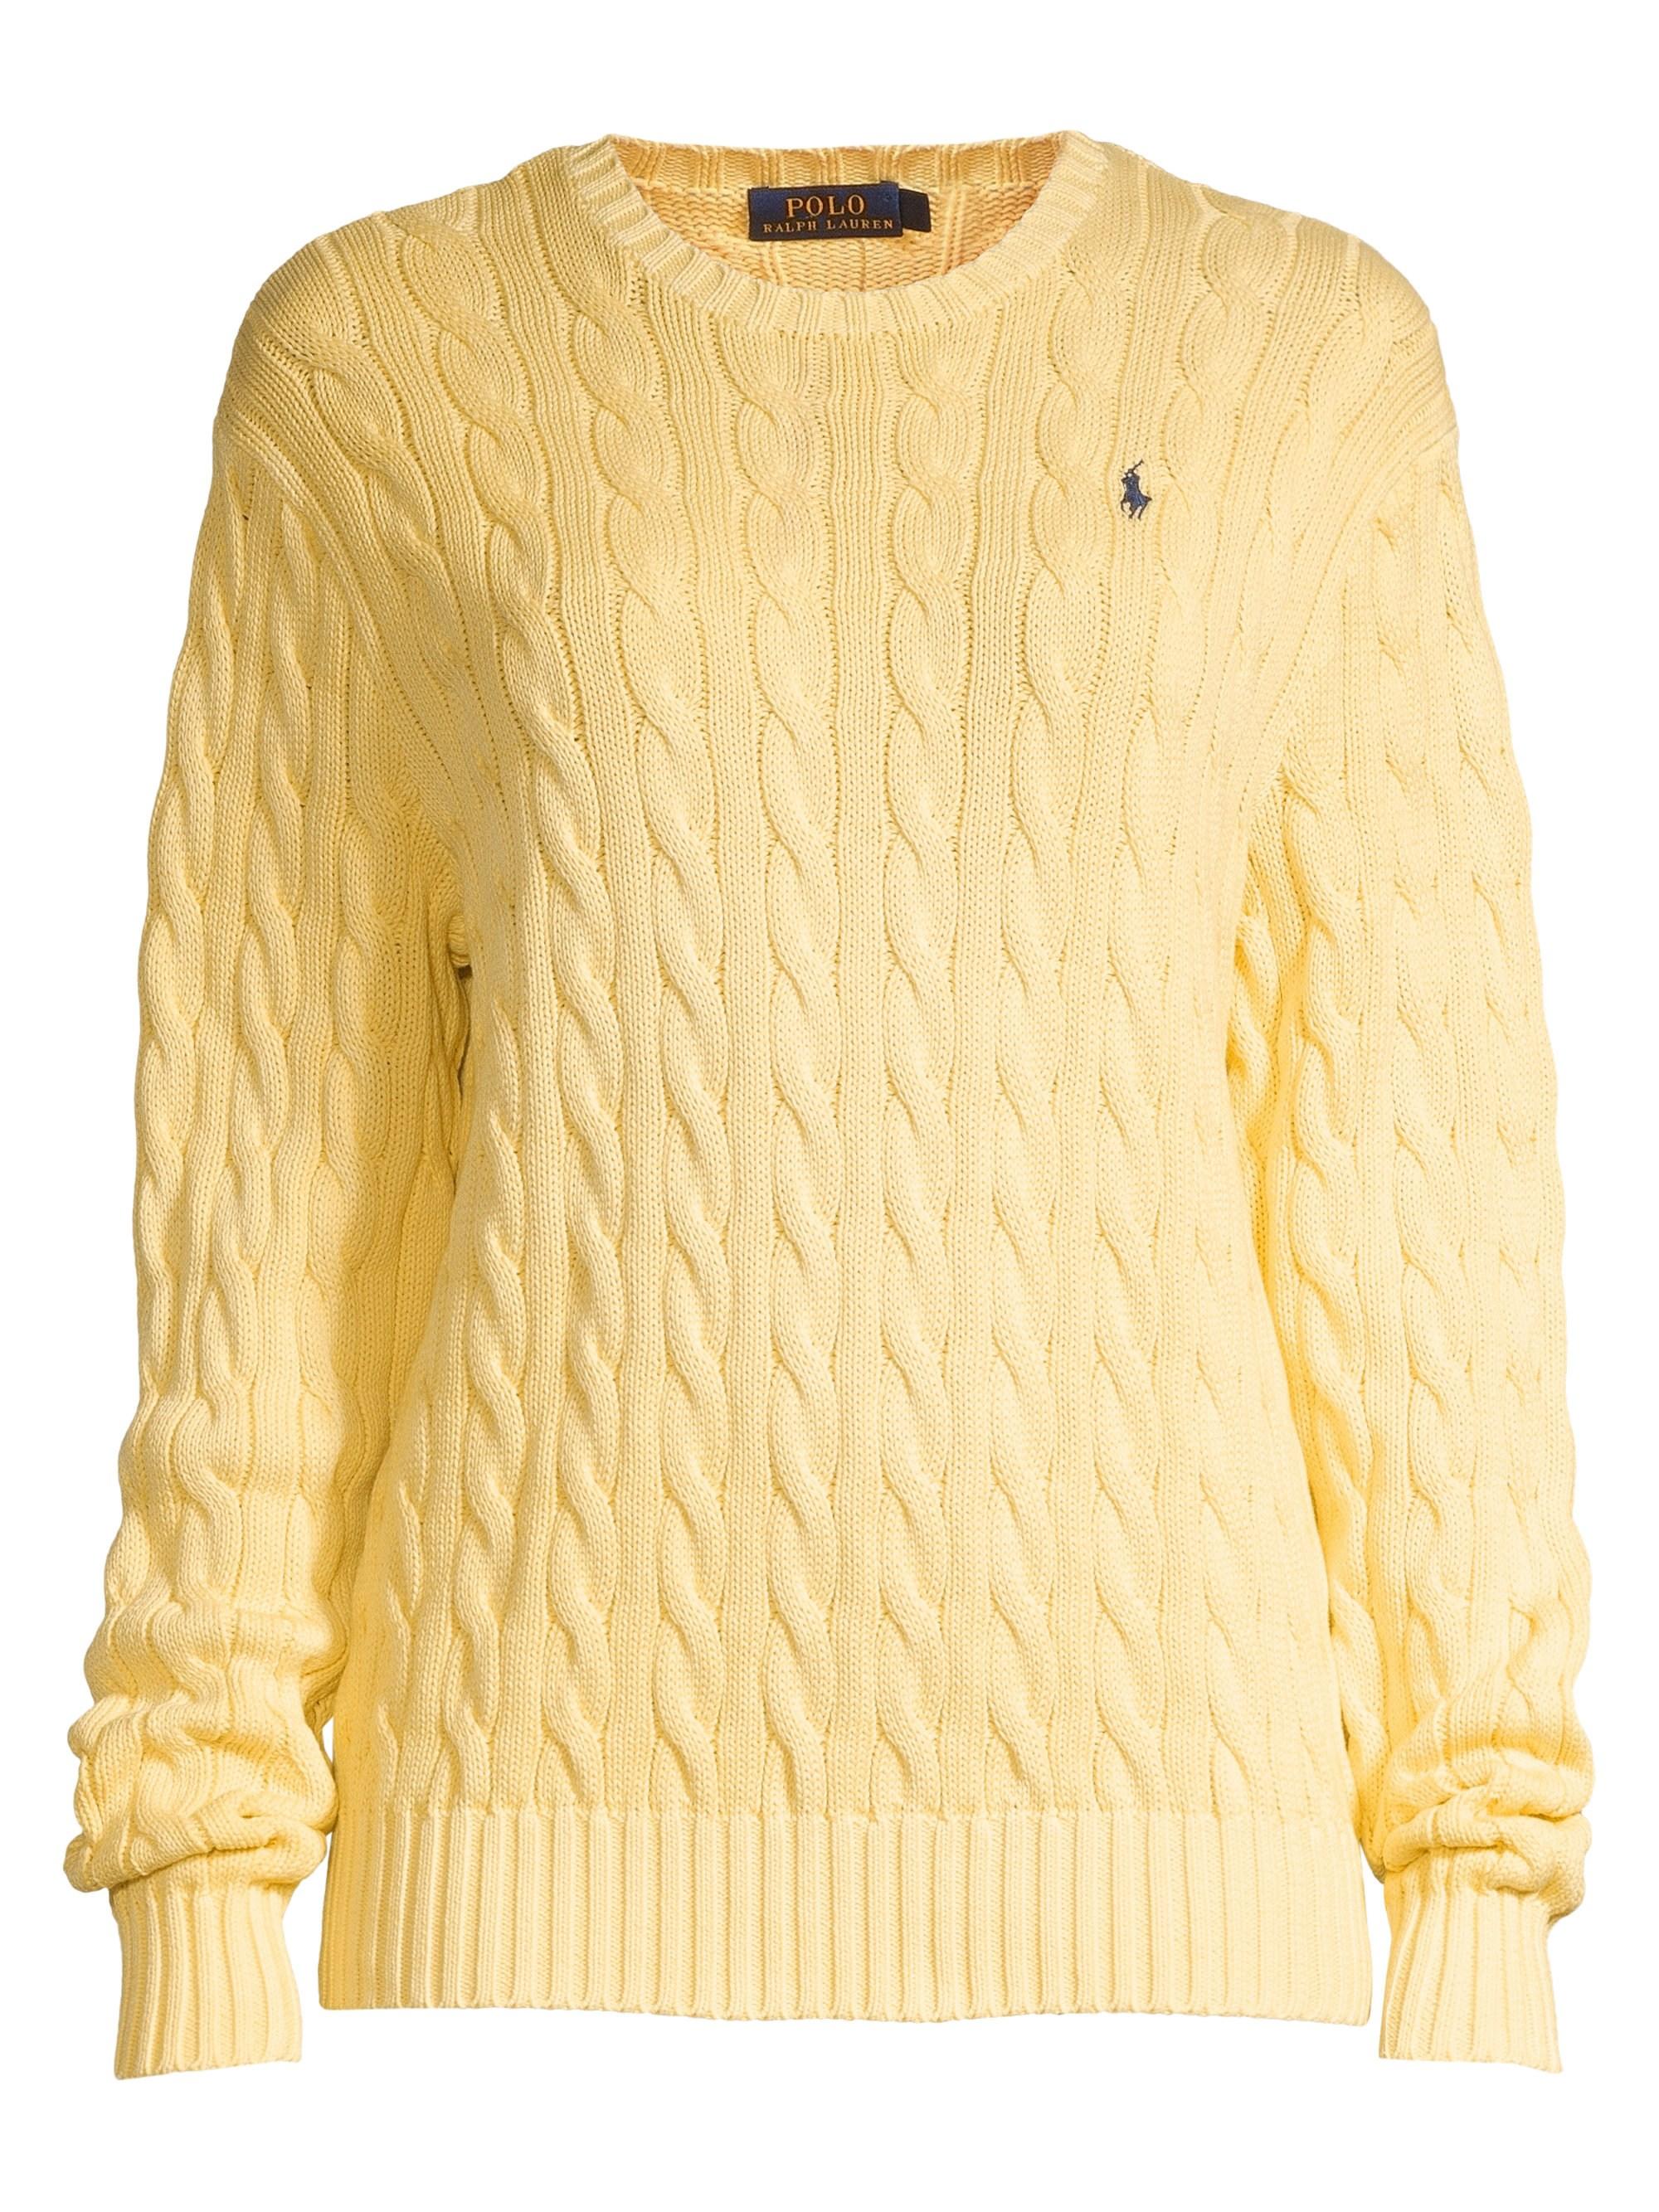 Lyst Polo Ralph Lauren Women's Cotton Cableknit Sweater